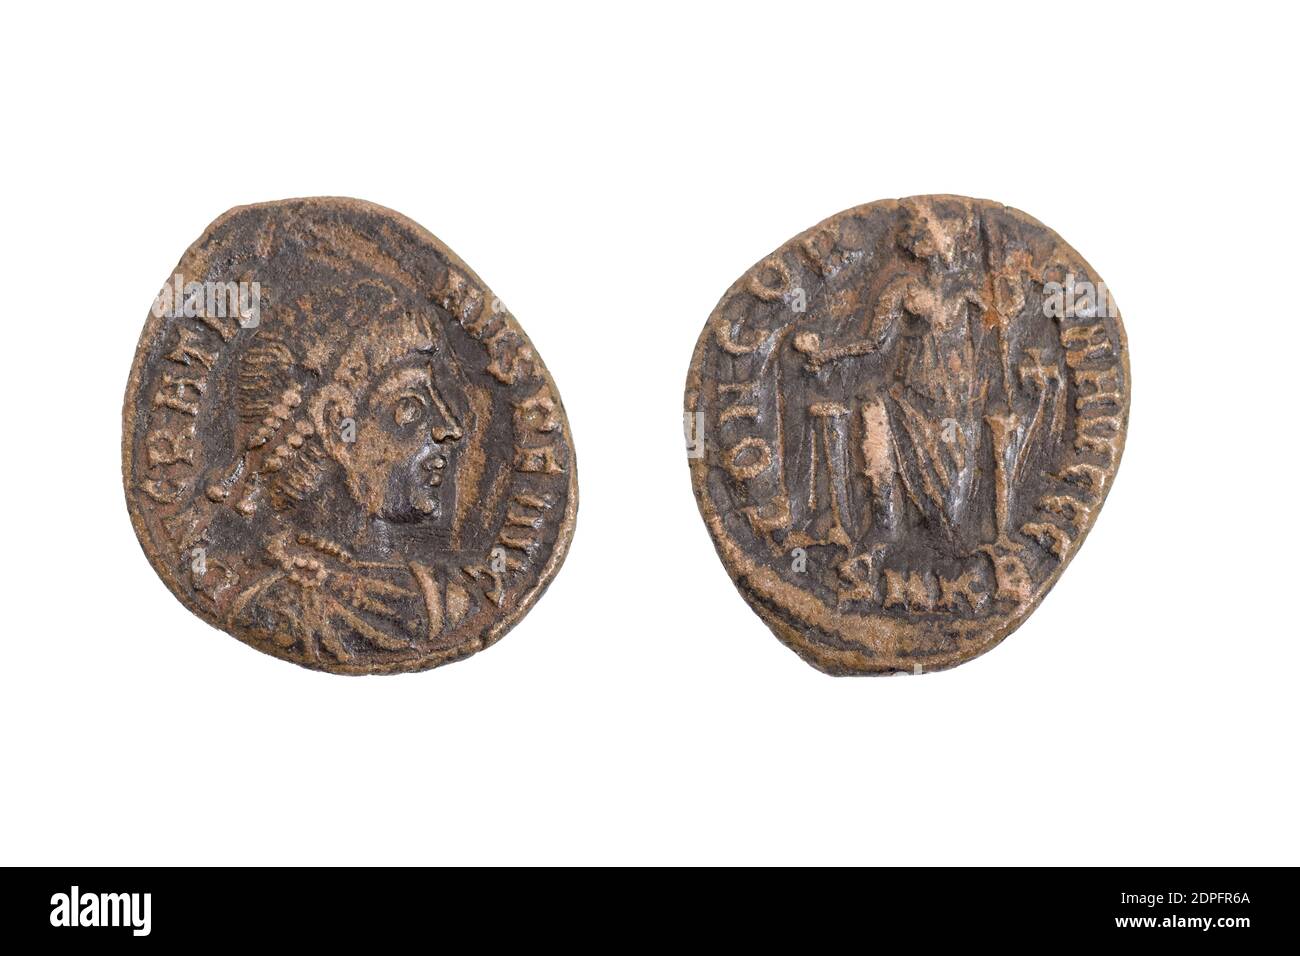 Roman Cross Pocket Coin [Bronze] by Stephen David Leonard